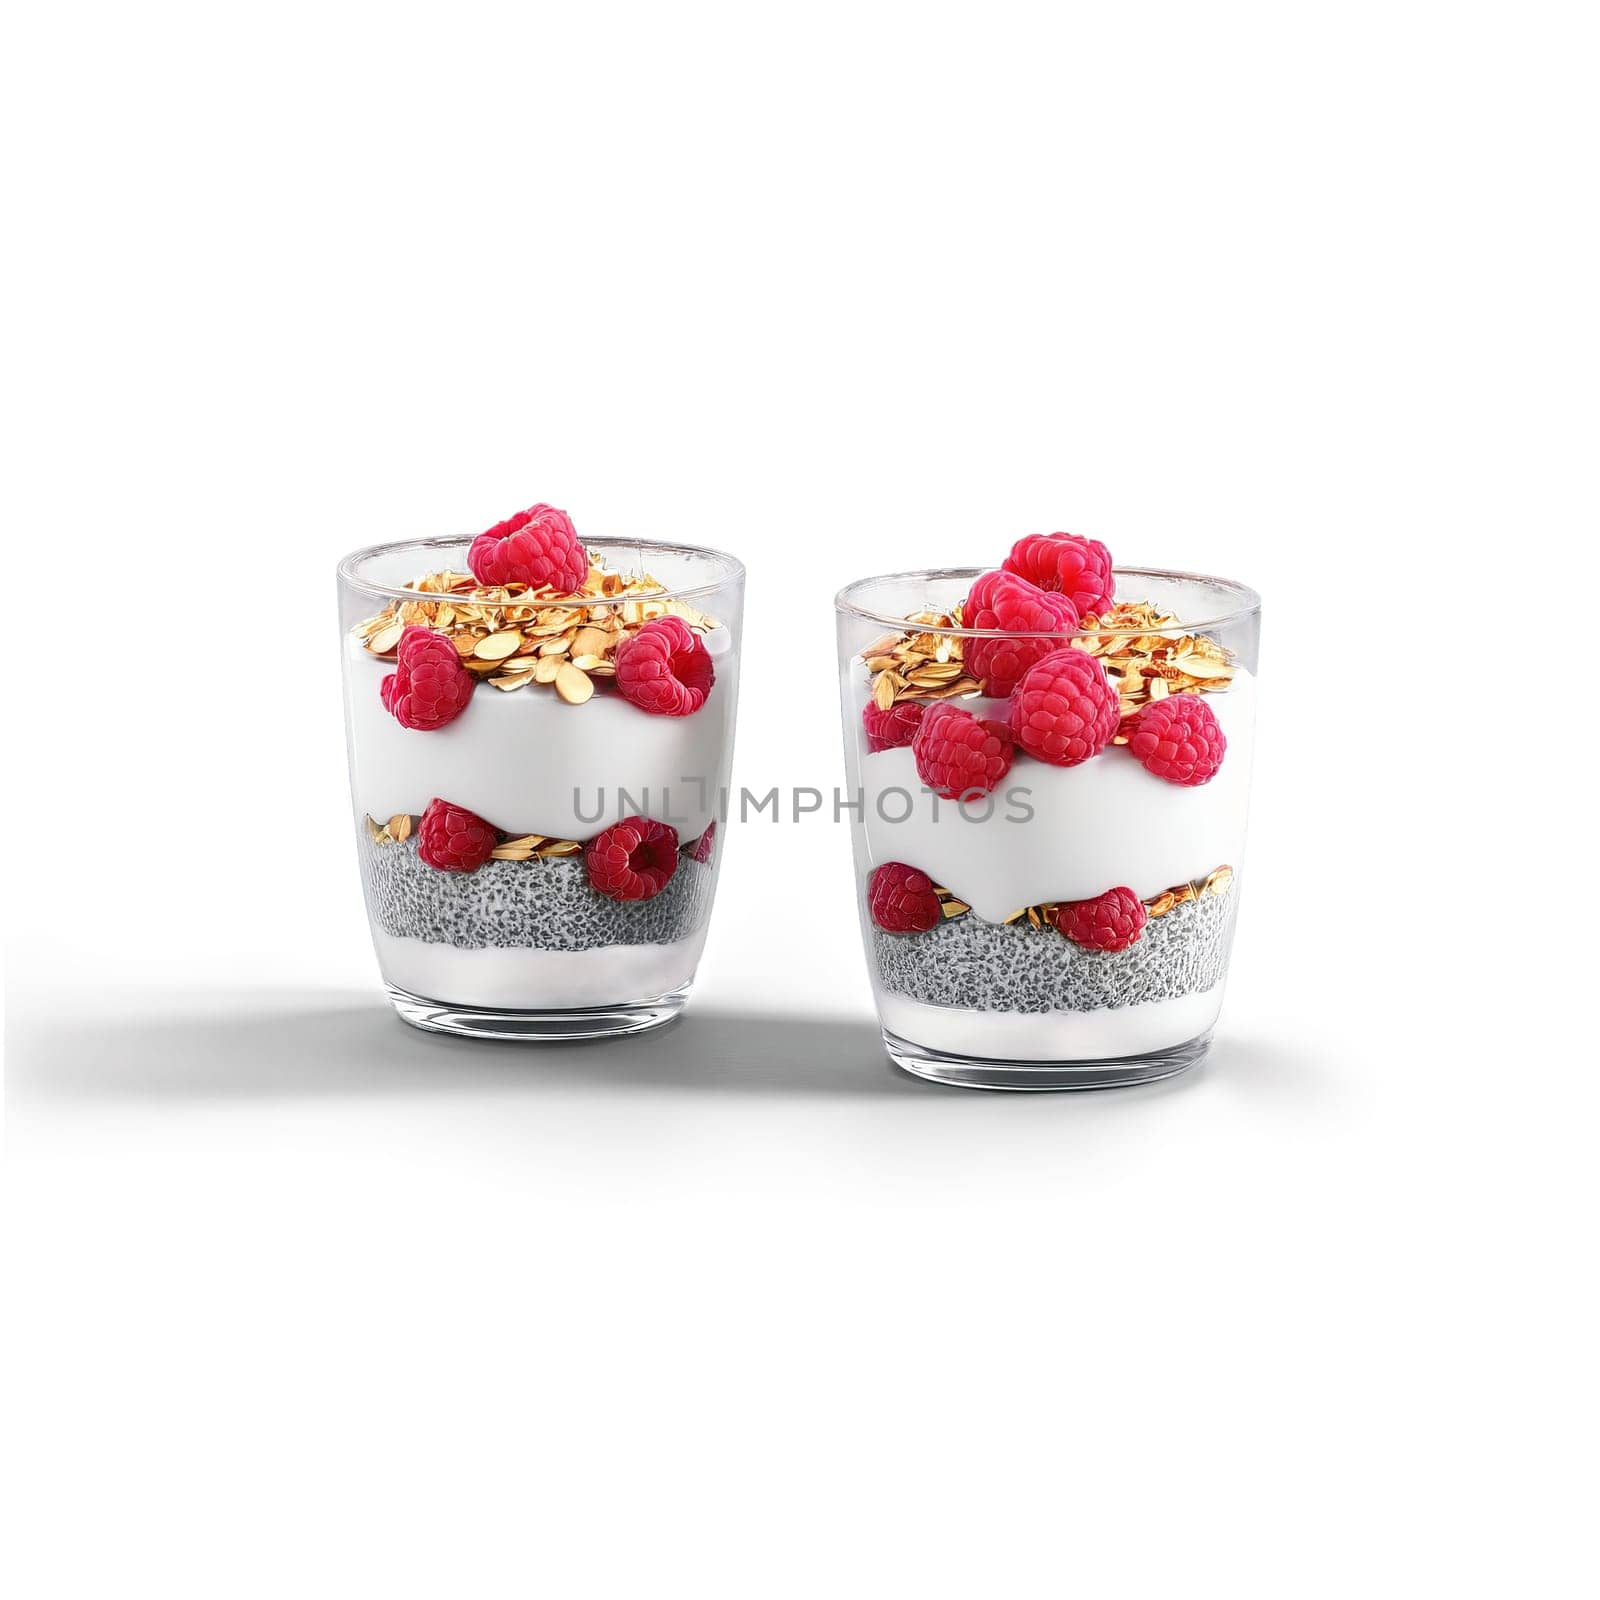 Breakfast parfait with layers of chia pudding vanilla yogurt and fresh raspberries by panophotograph